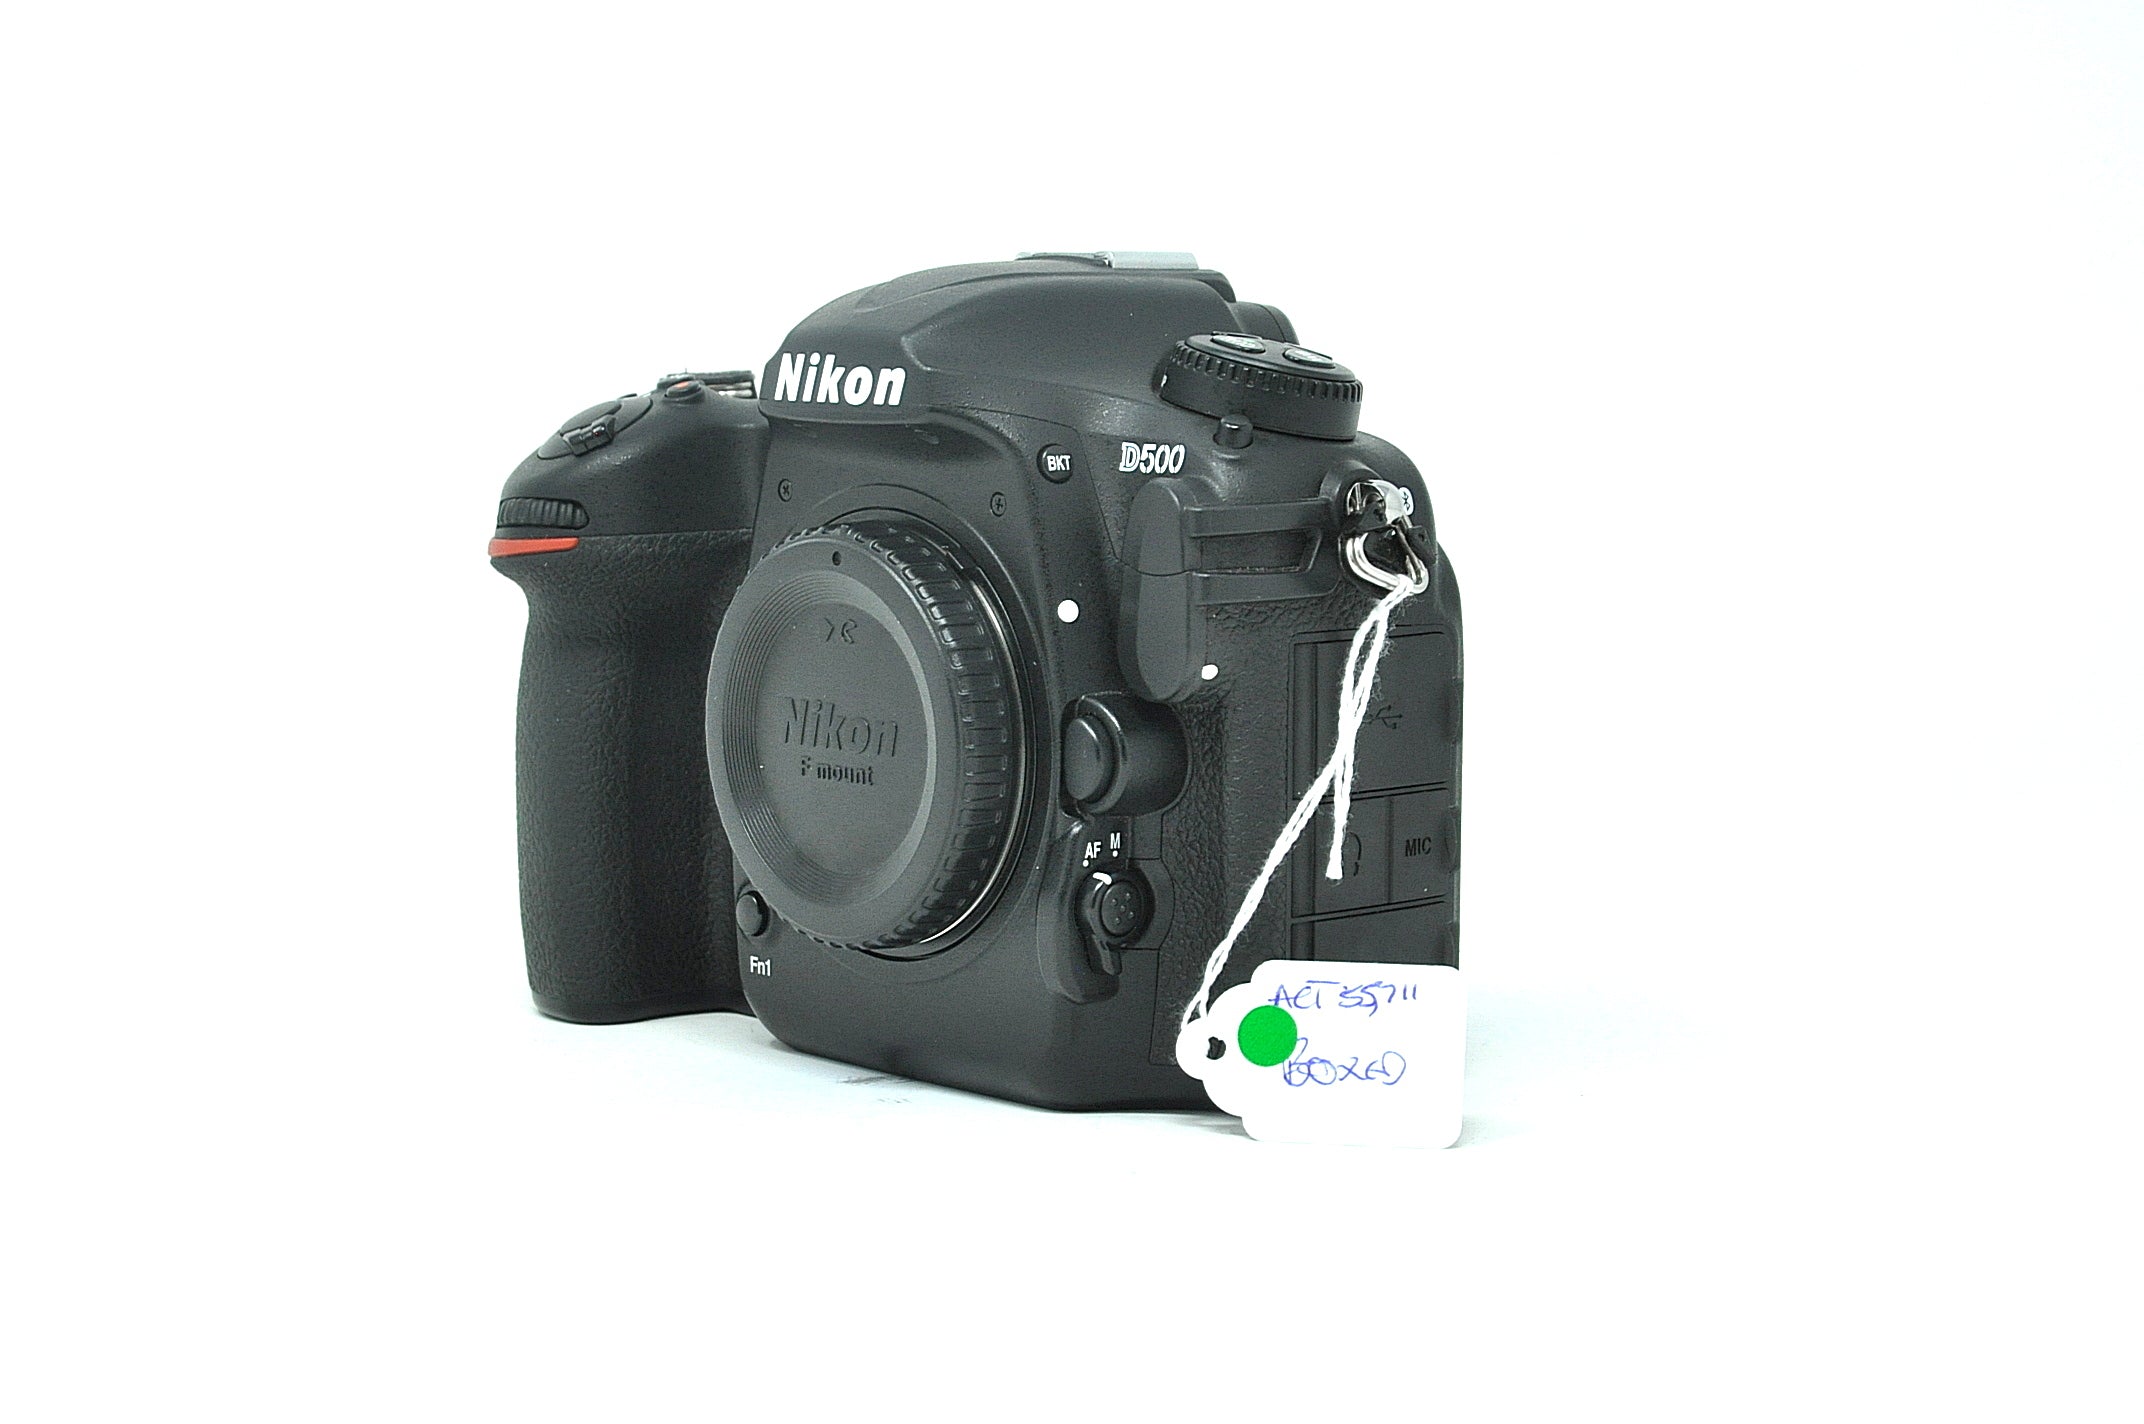 Used Nikon D500 DSLR camera (Actuations 55711)(Boxed SH39949)